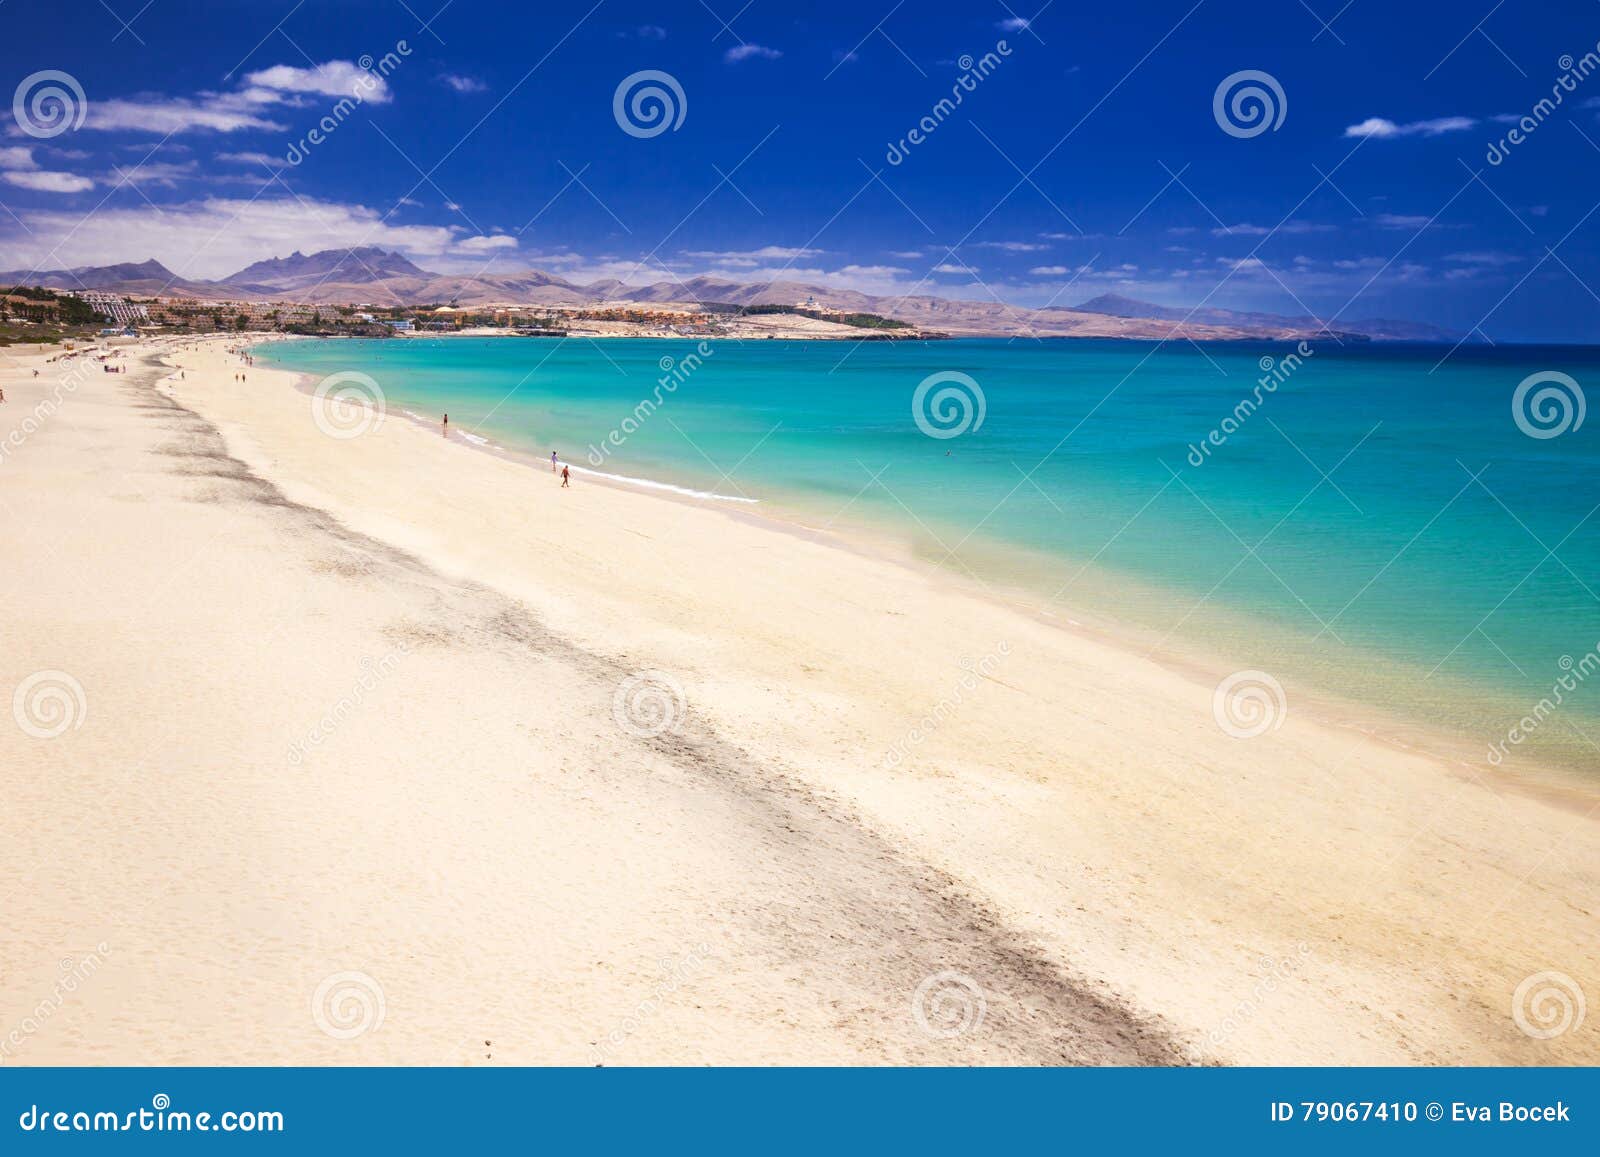 costa calma sandy beach with vulcanic mountains on jandia peninsula, fuerteventura island, canary islands, spain.